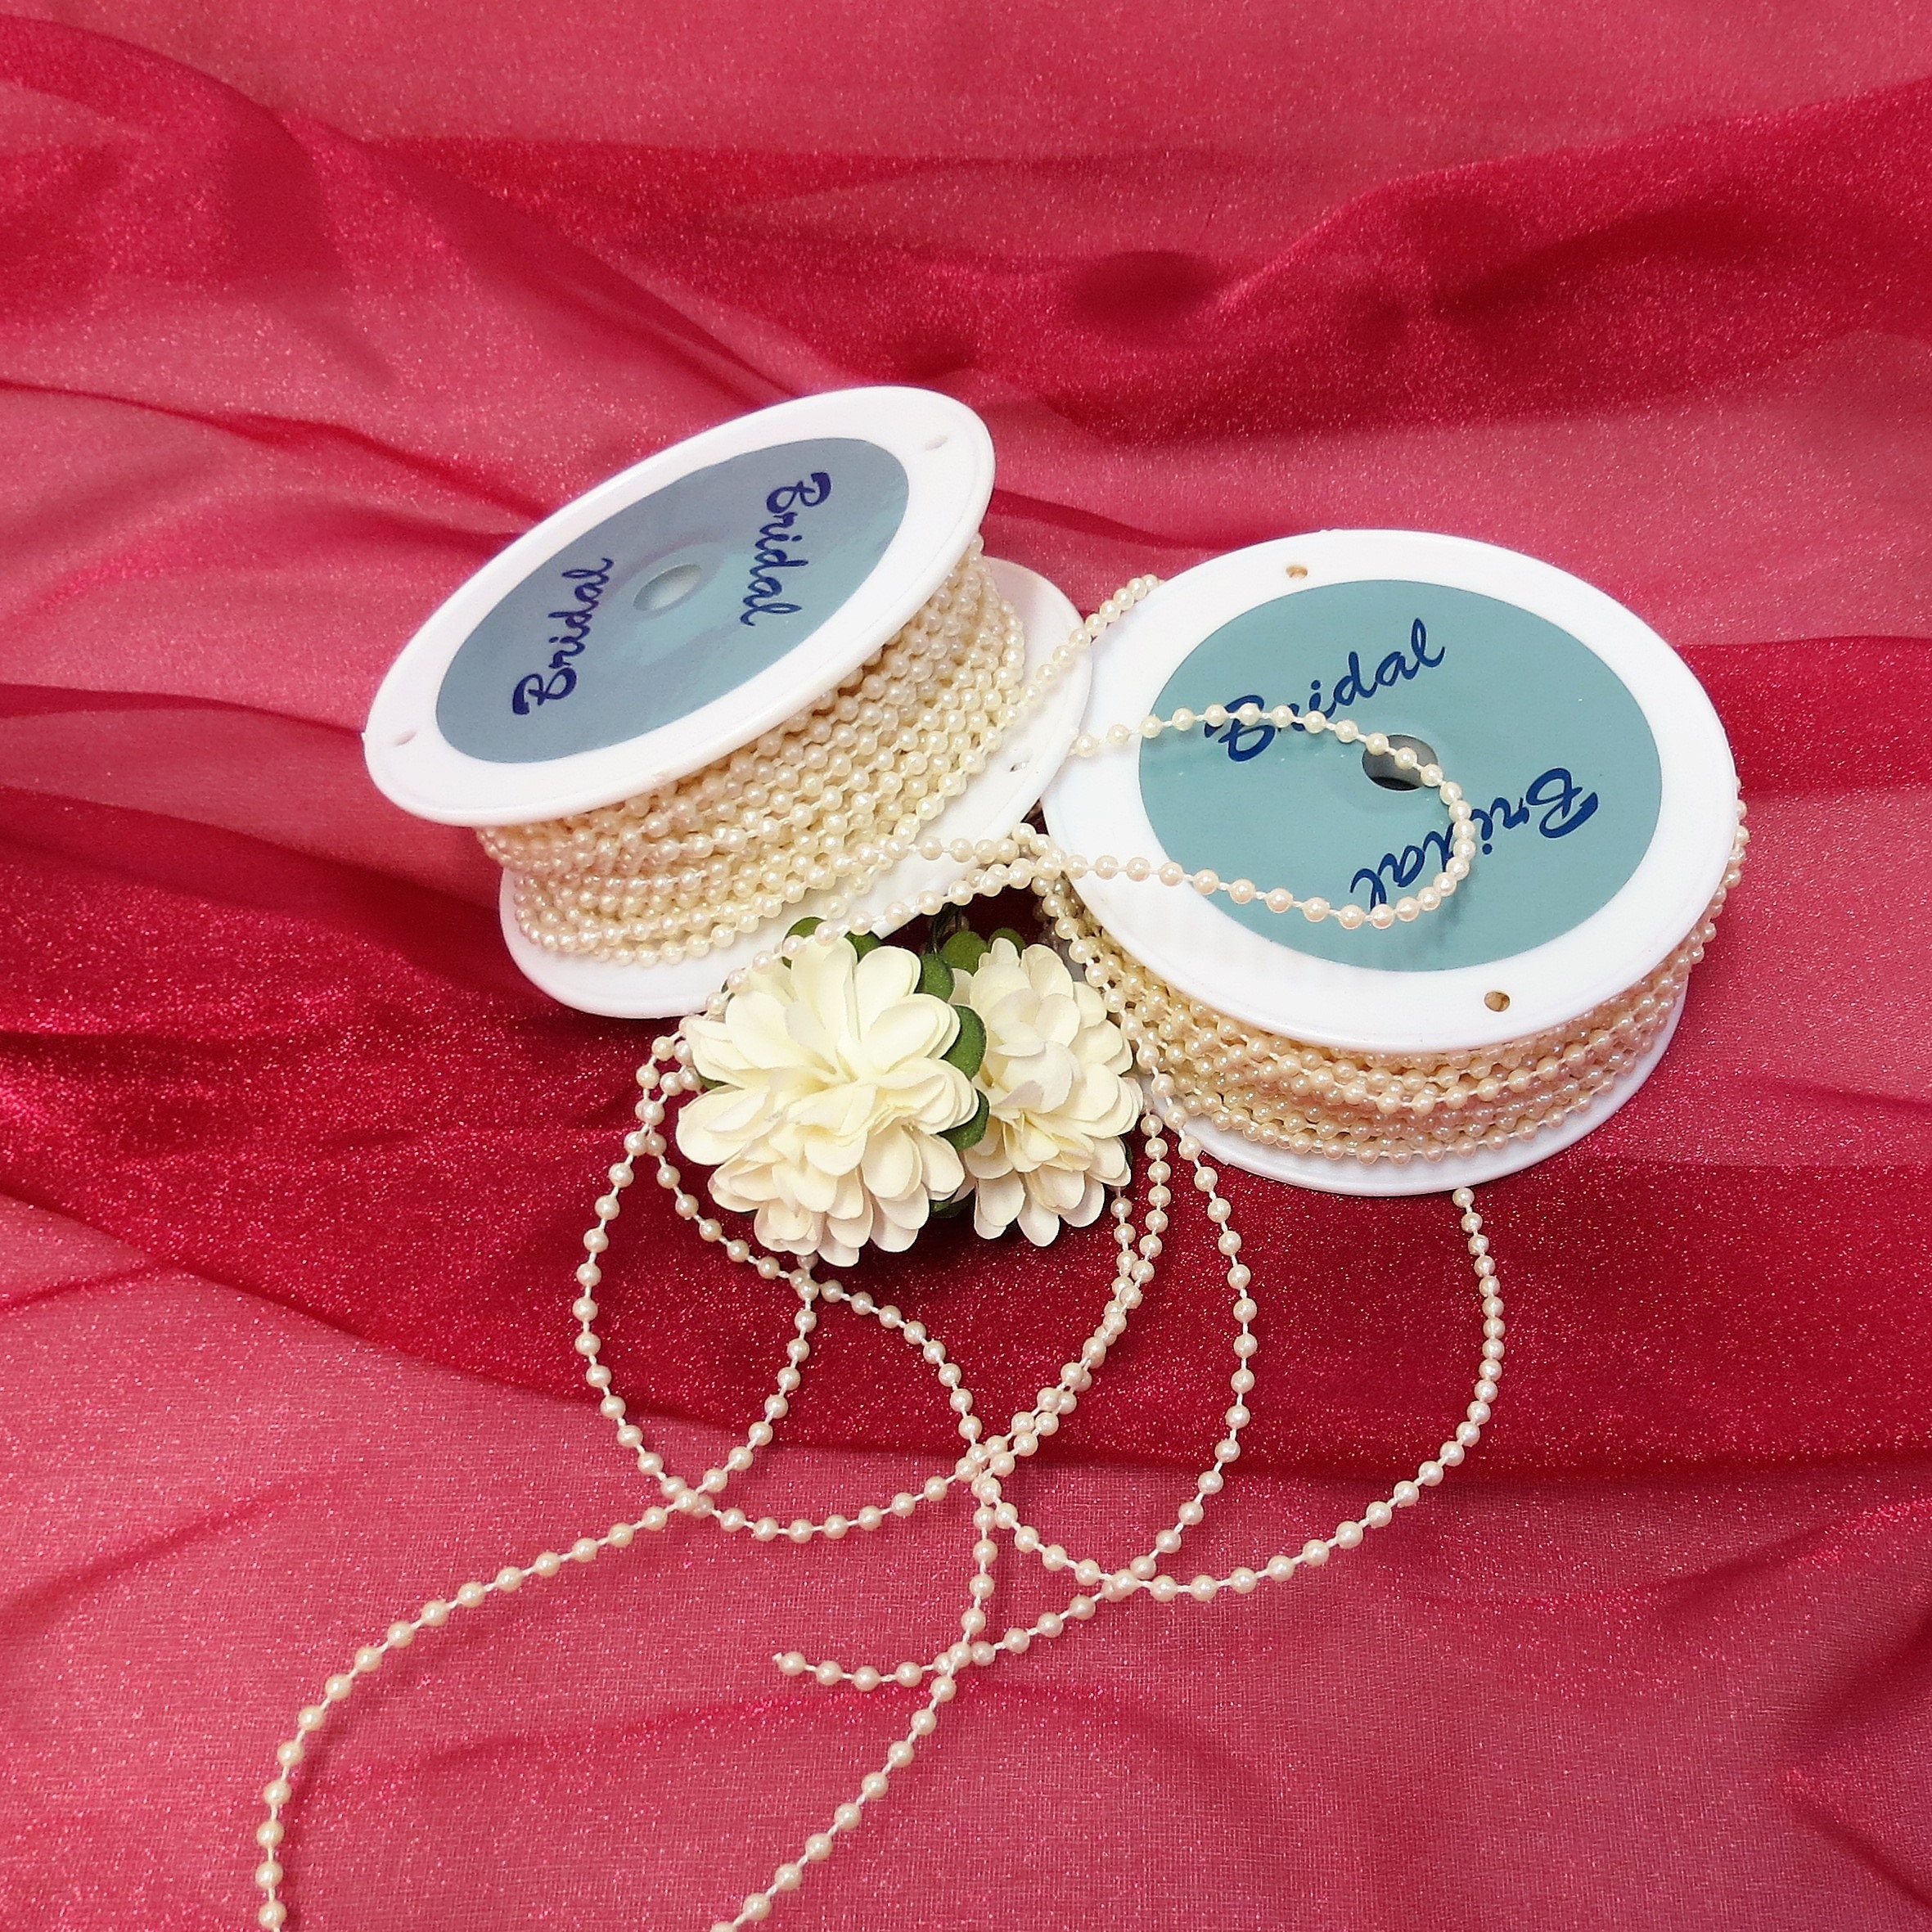 Mandala Crafts Flatback Pearls for Crafts – Imitation Flat Back